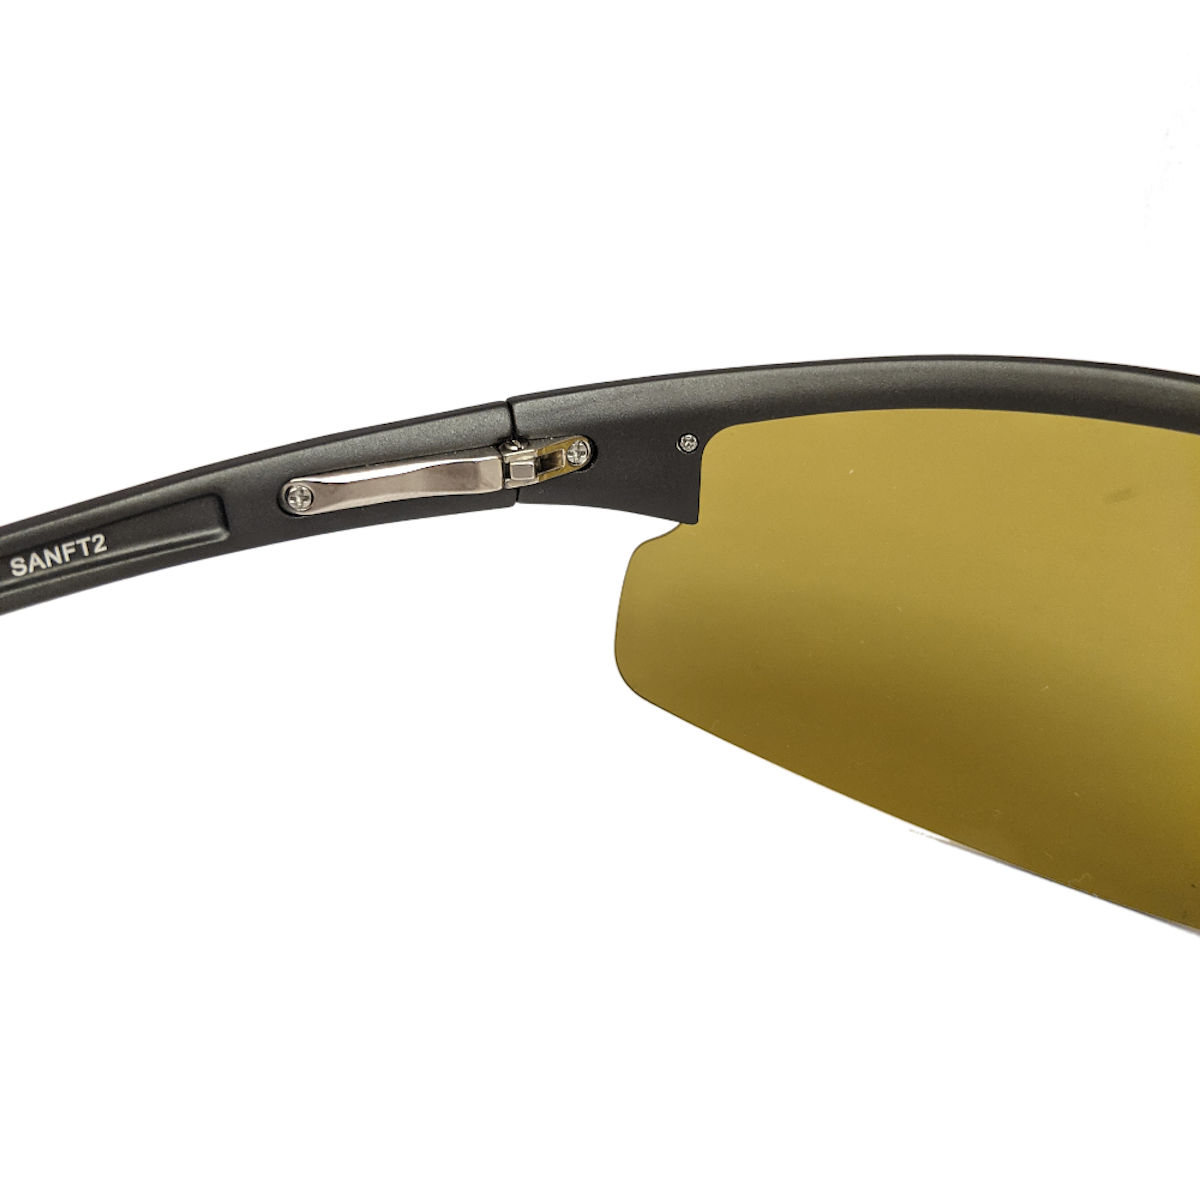 polarized photochromic sunglasses with strong bolt lock hinge